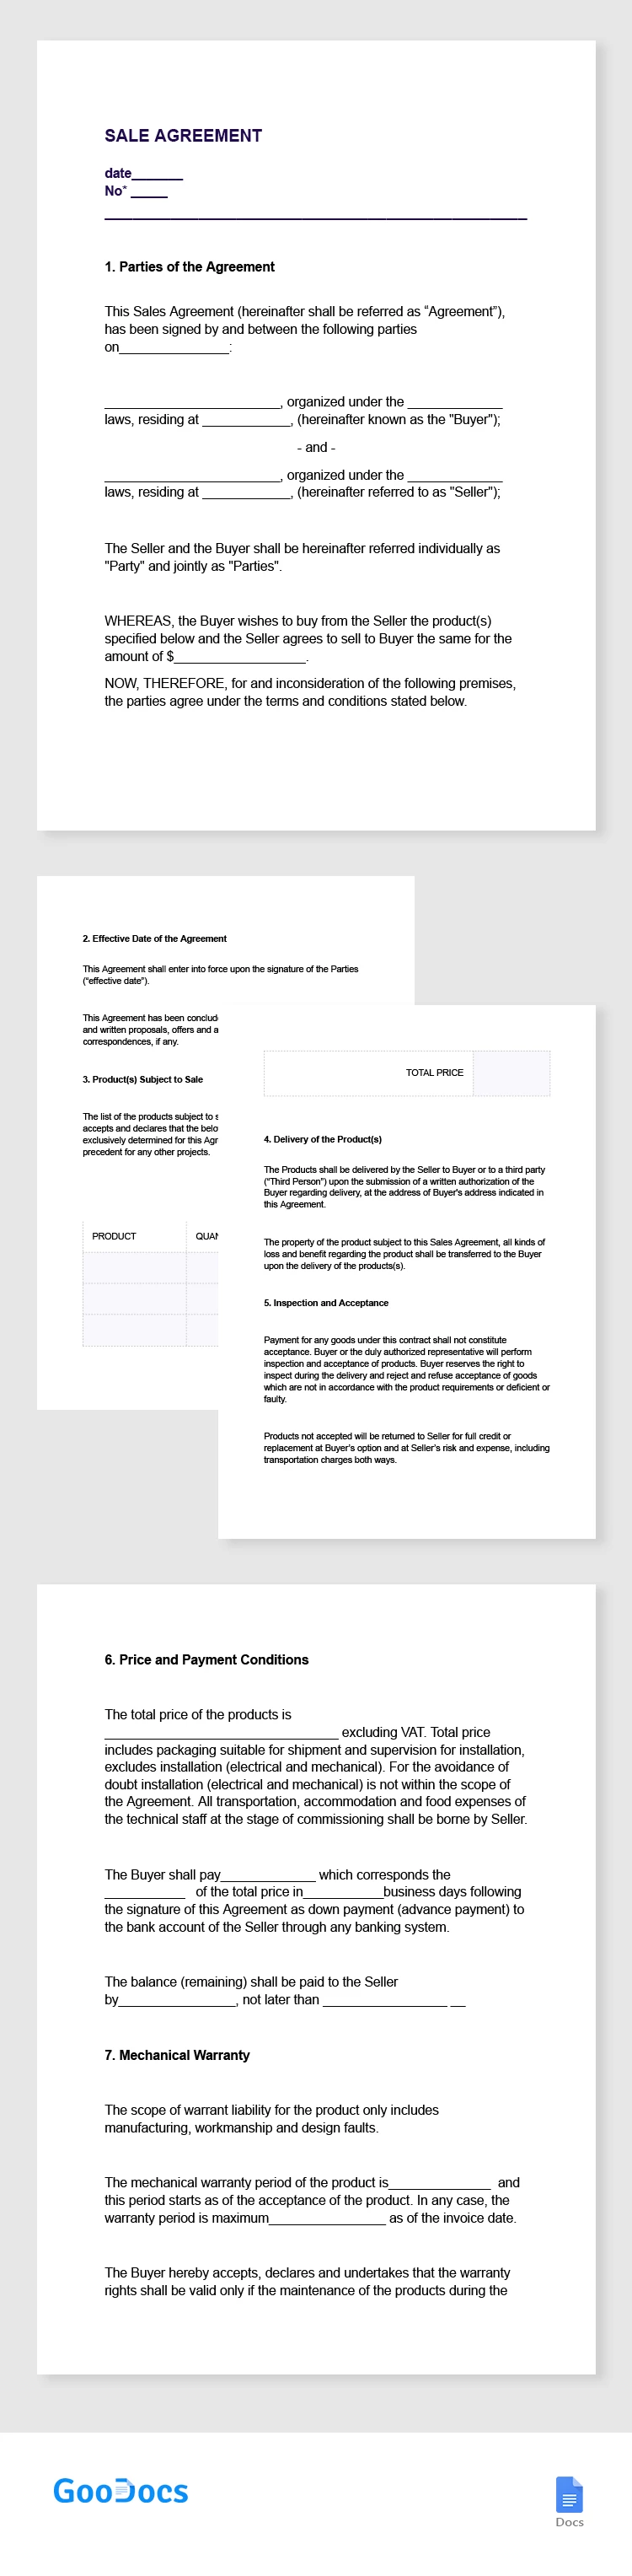 Sale Agreement - free Google Docs Template - 10065349